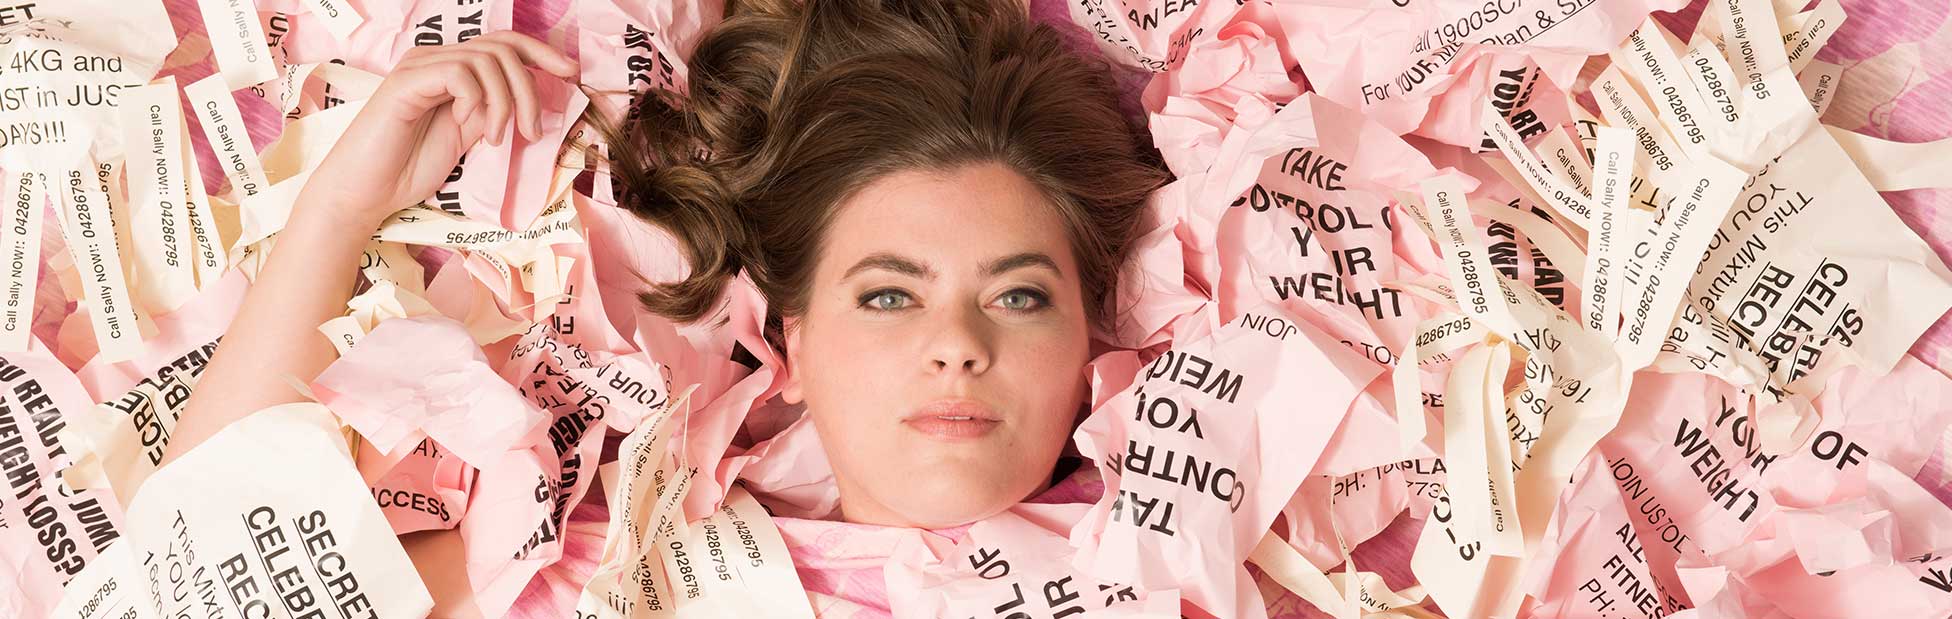 Woman lying among pink notes